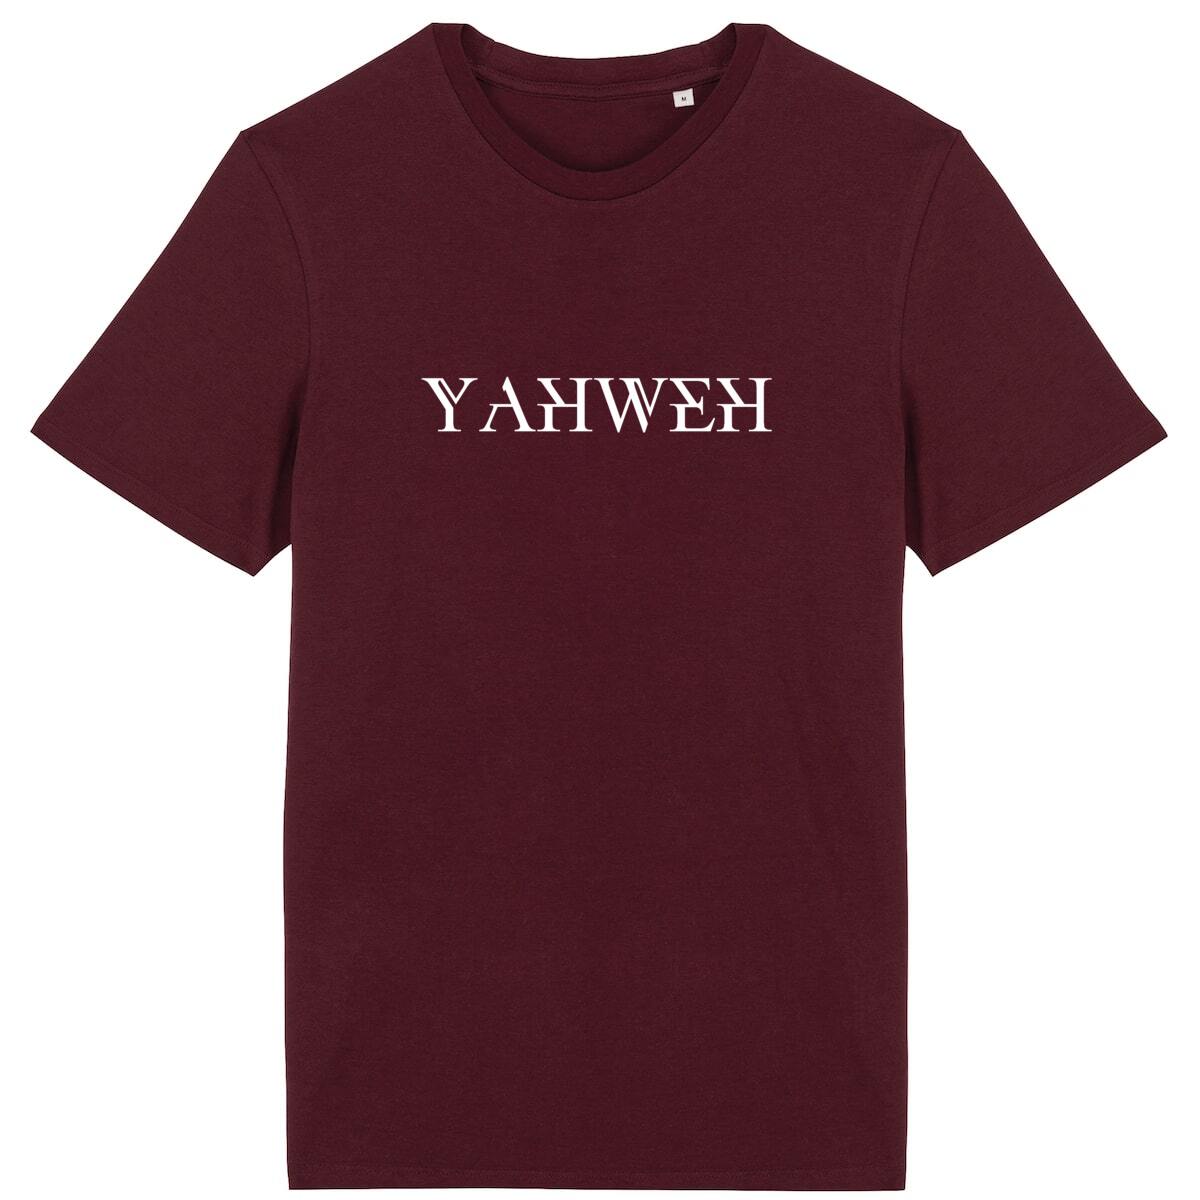 YAHWEH Lightweight unisex t-shirt - Premium